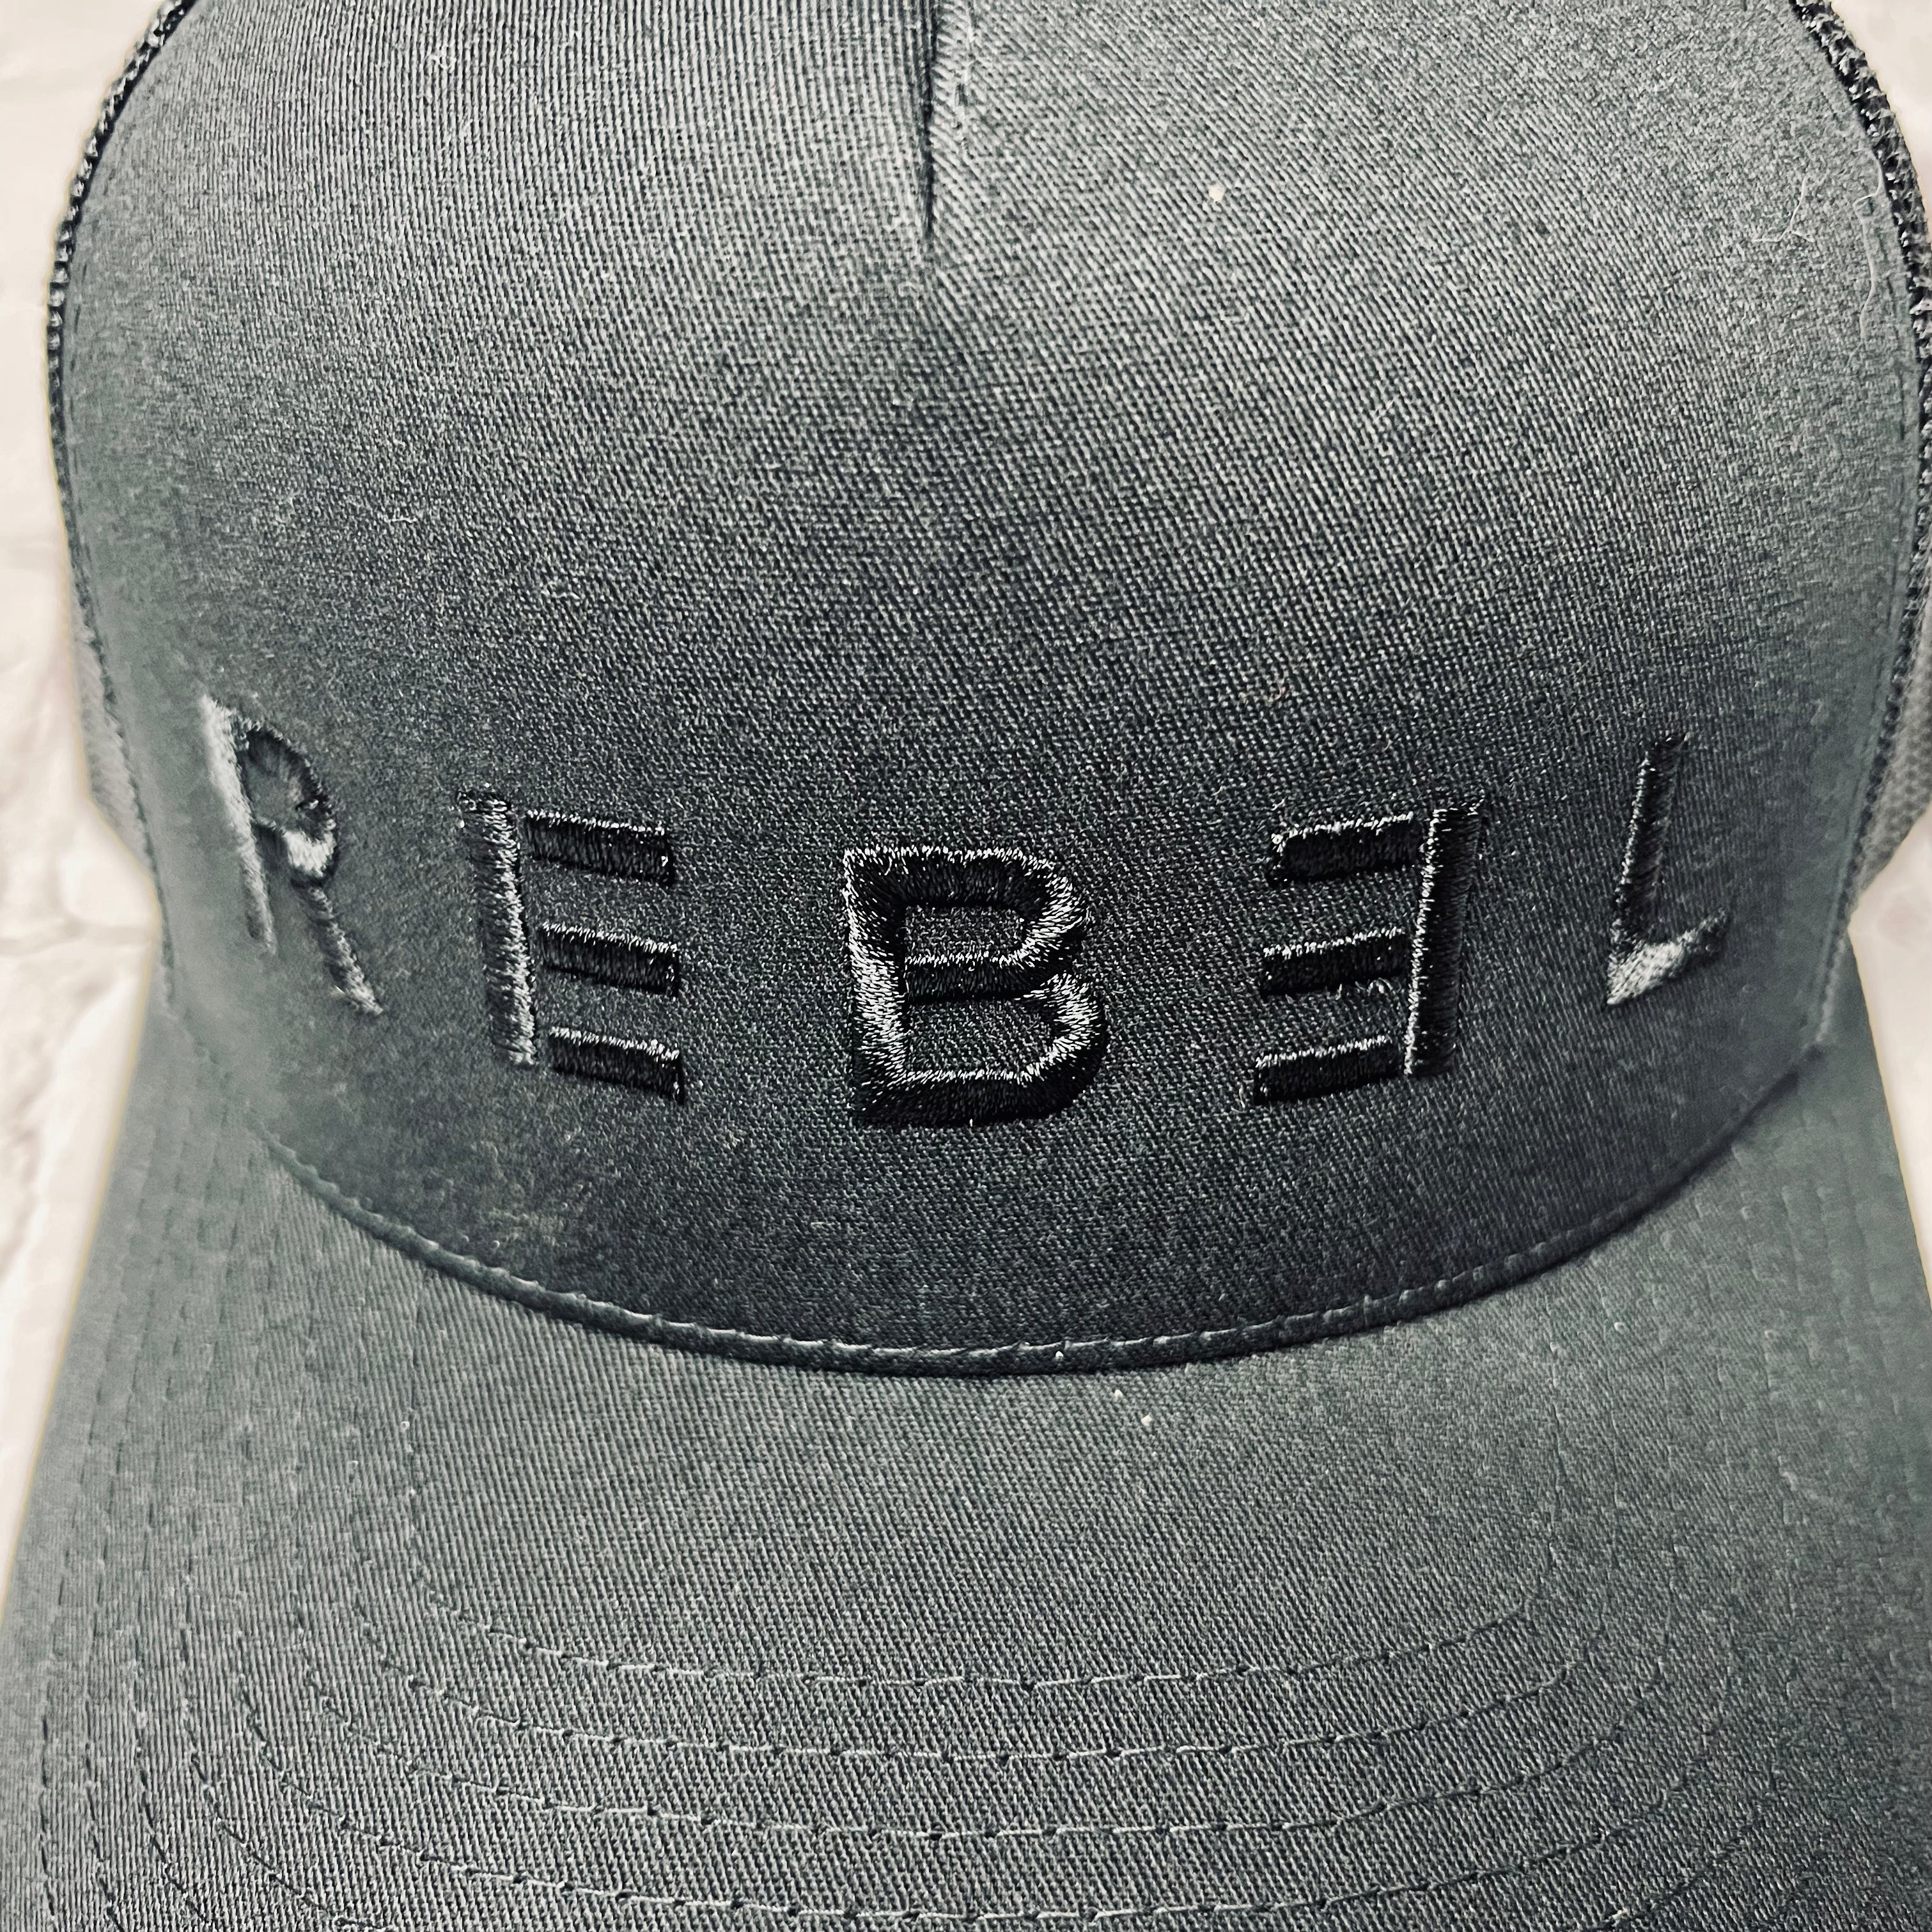 Black on Black REB3L Logo Trucker Hat